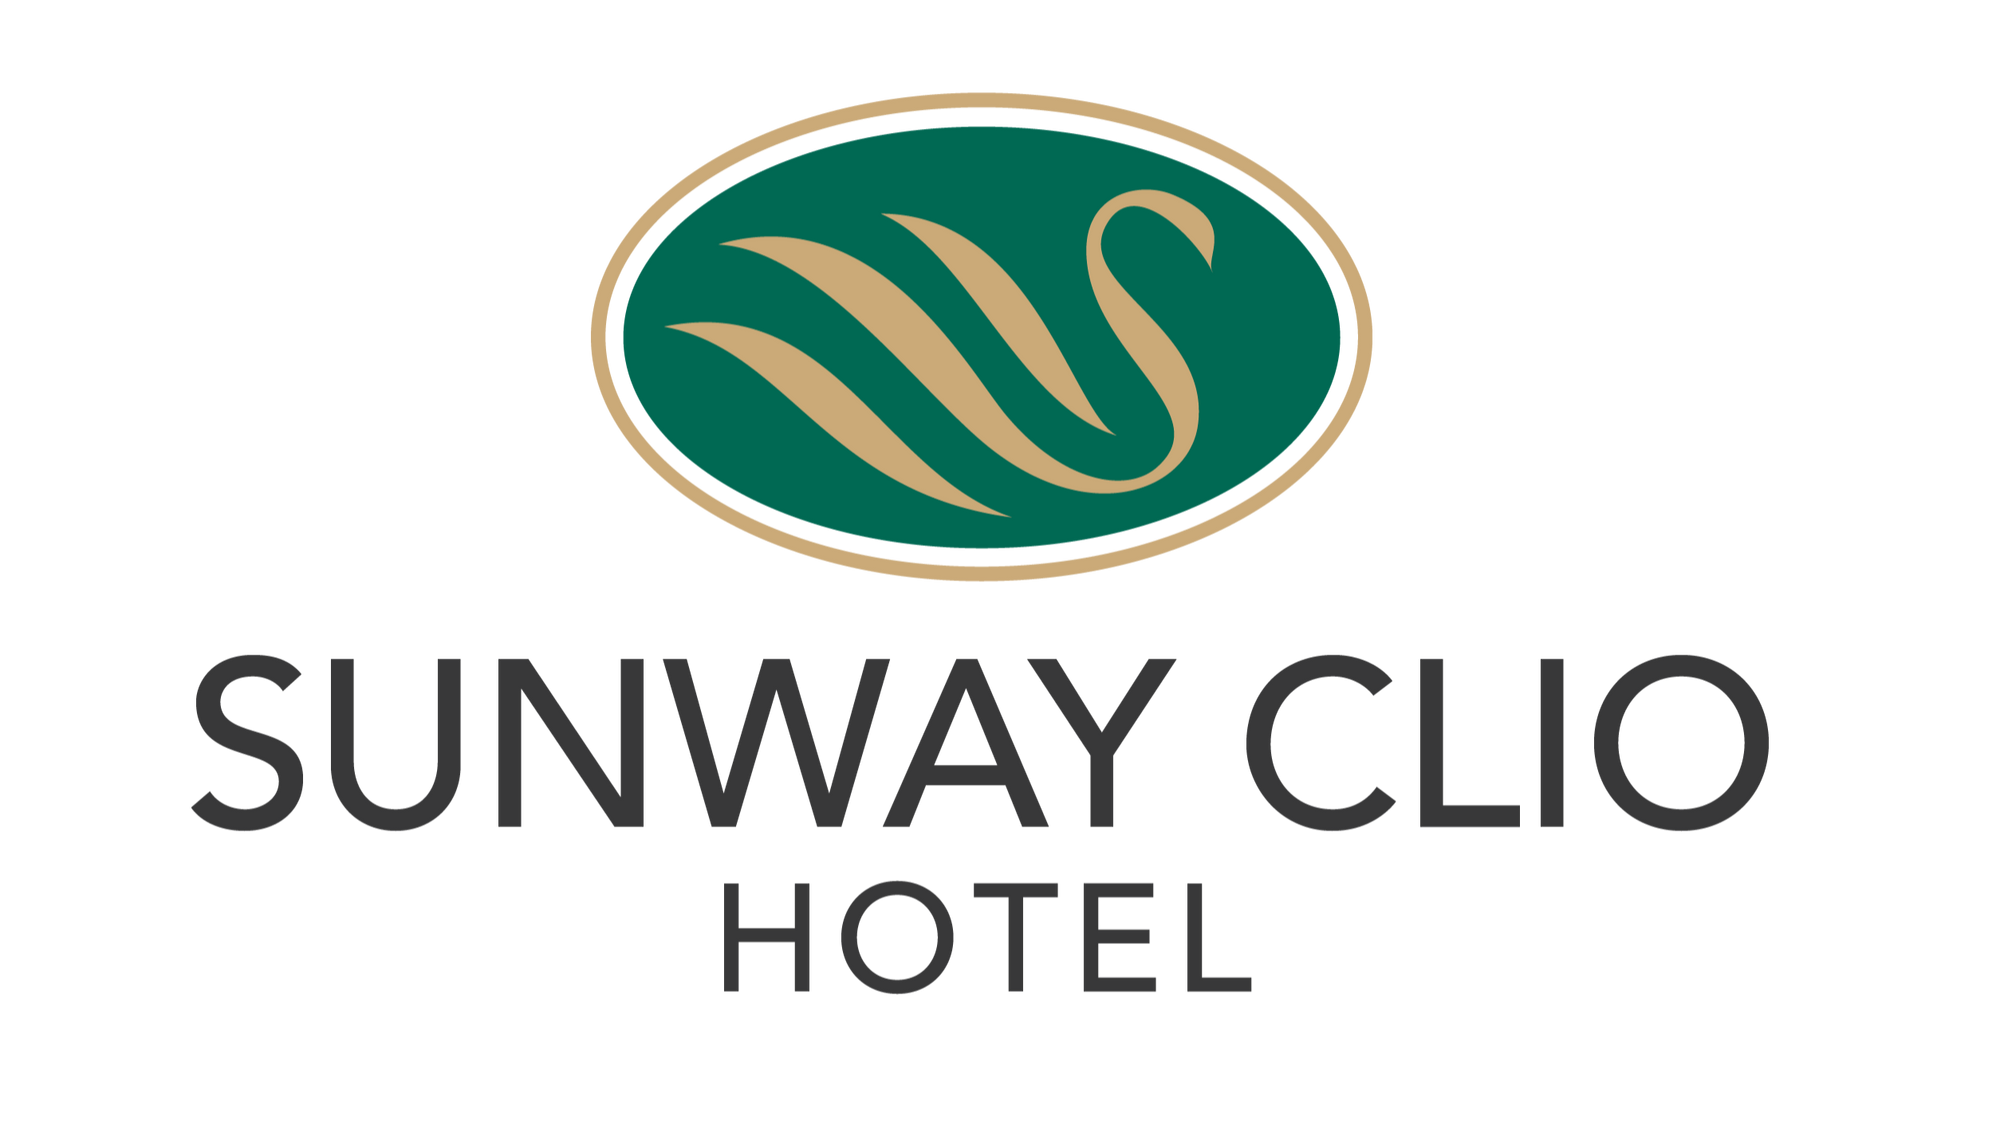 Sunway Clio Hotel logo